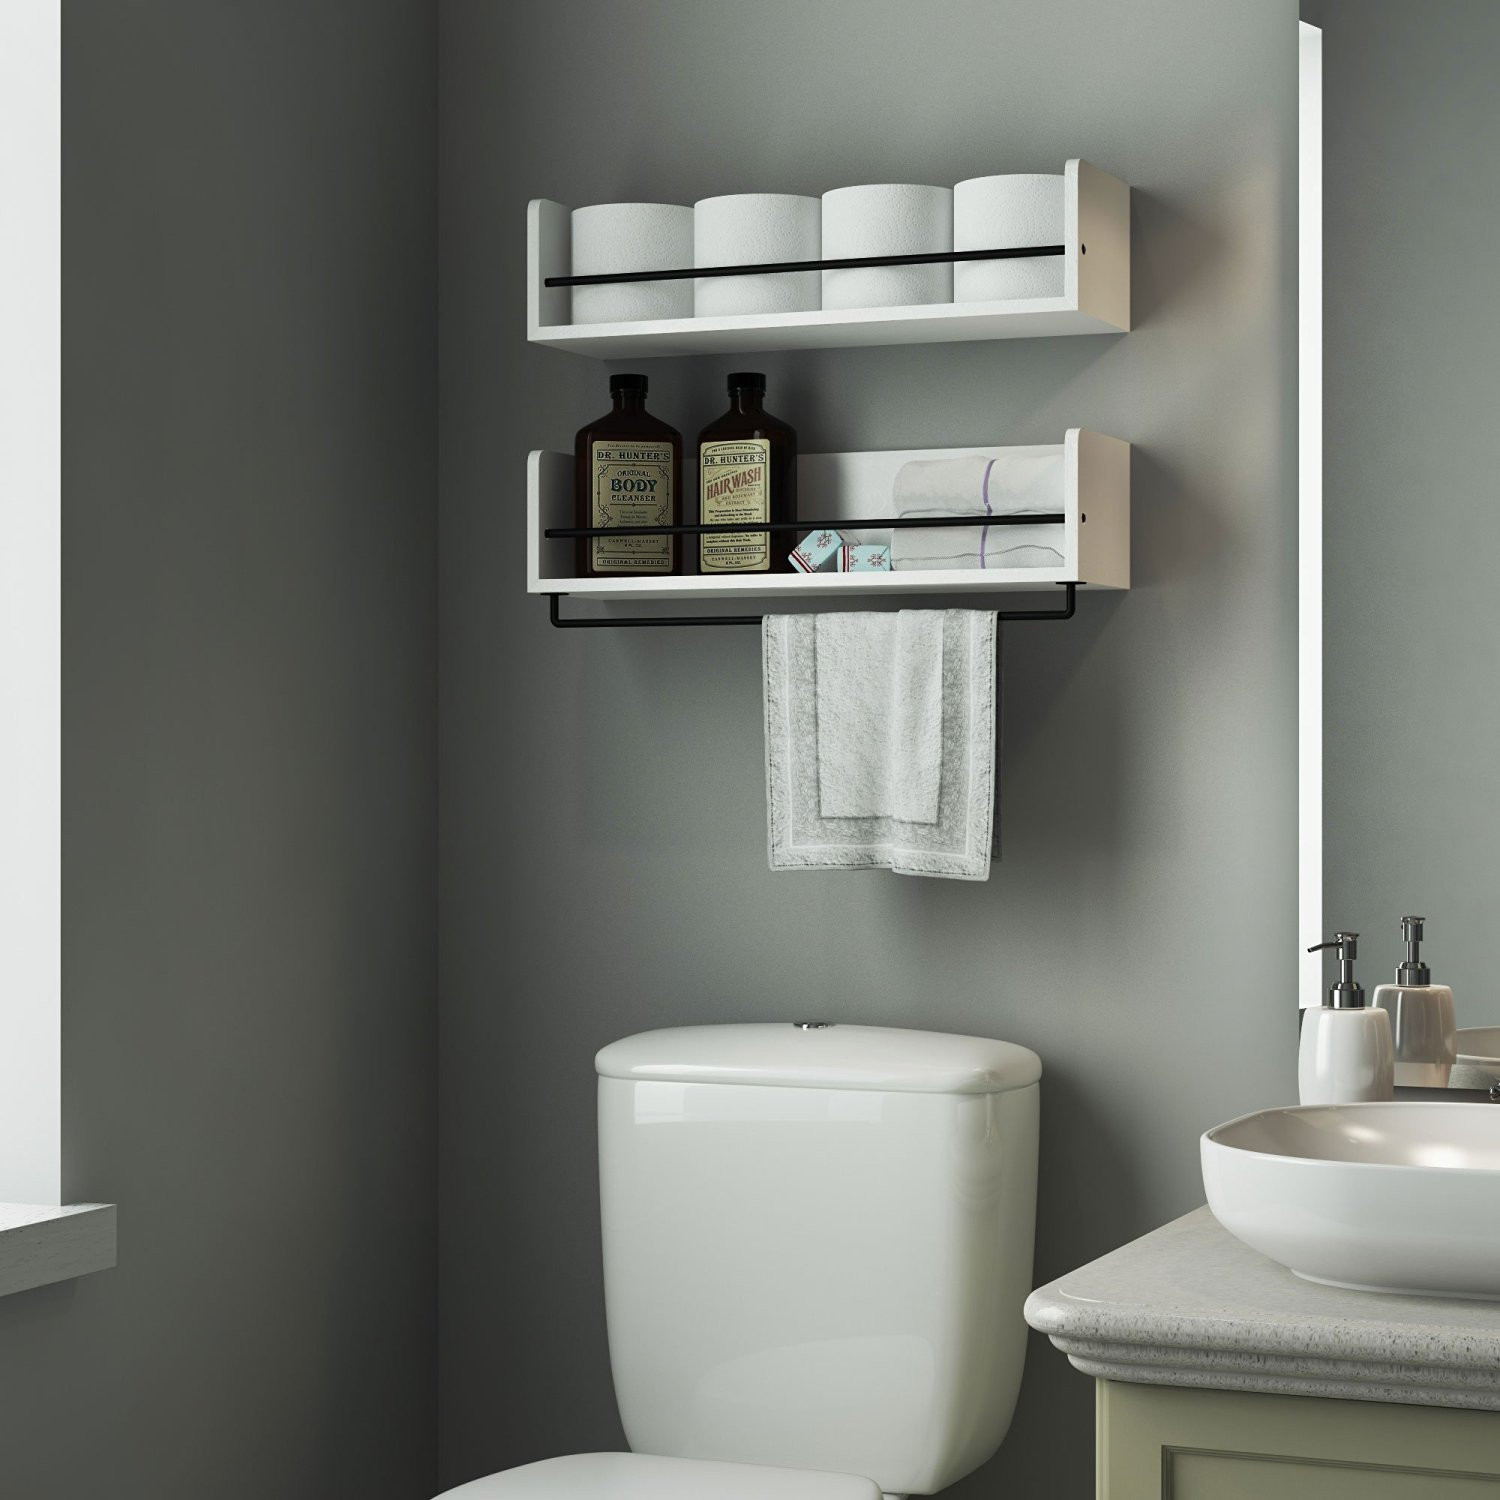 Small White Bathroom Shelf
 Bathroom Shelves Beautiful and Easy DIY Bathroom Space